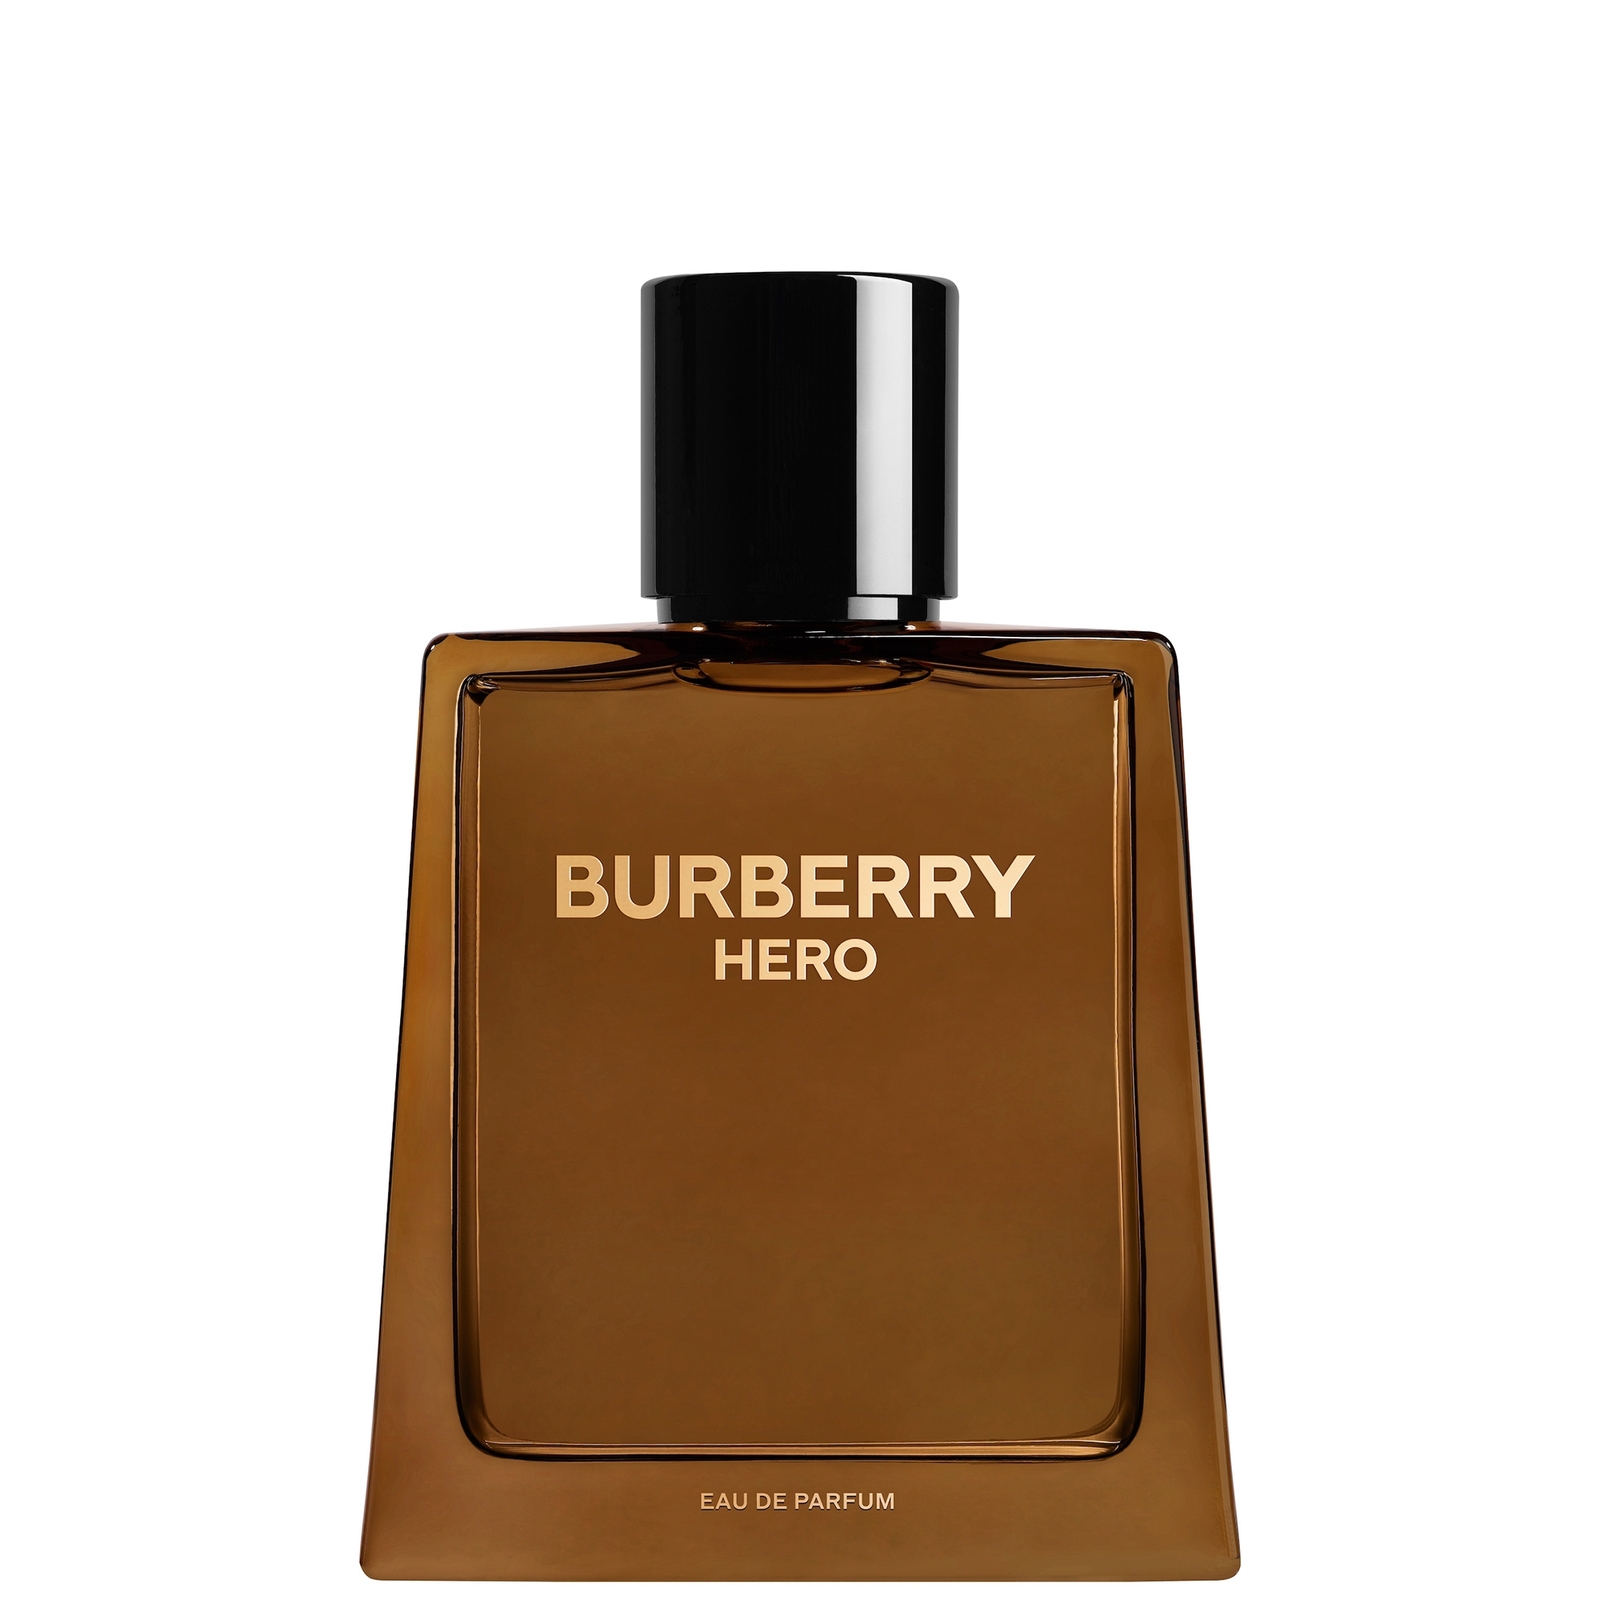 Image of Burberry Hero Eau de Parfum Profumo for Men 100ml